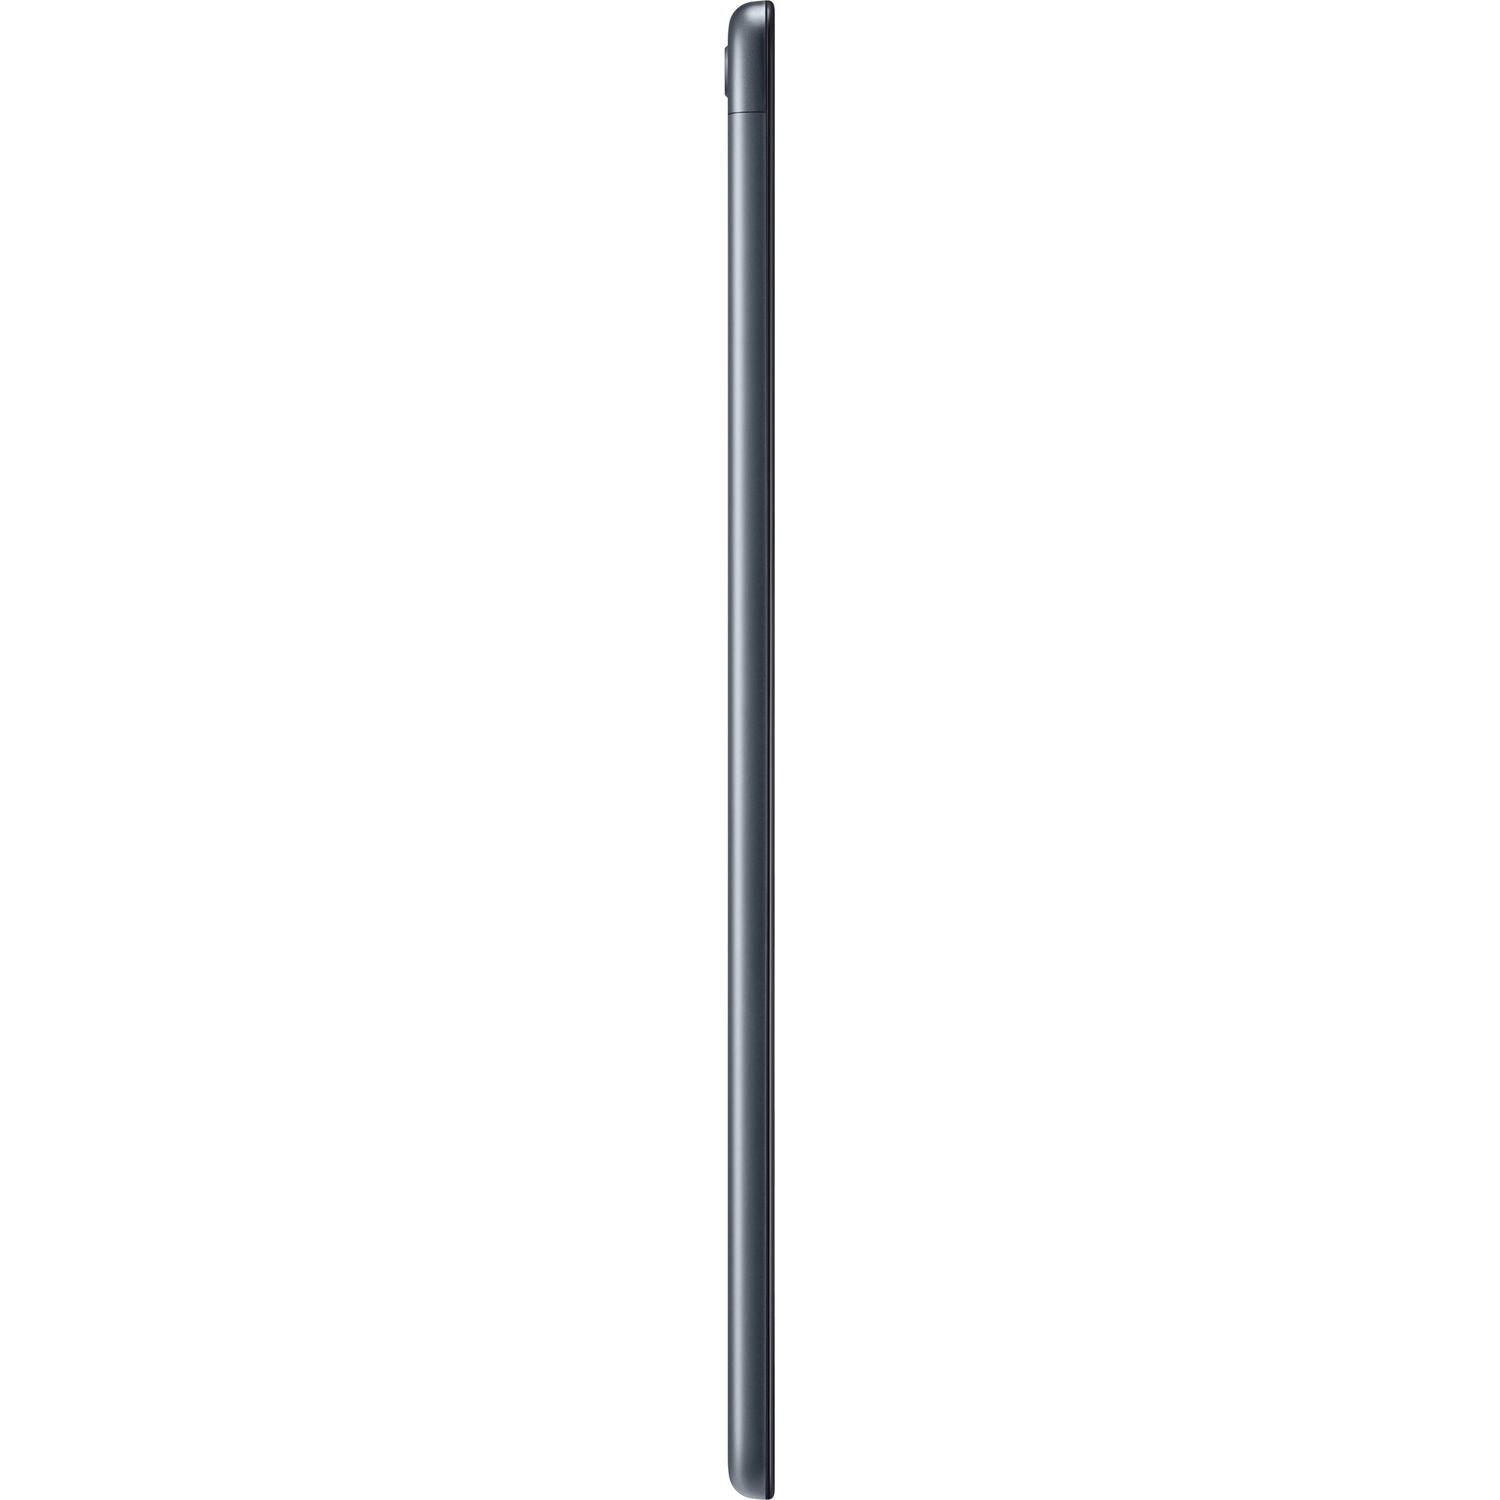 Samsung SM-T510NZKGXAR-RB 10.1" Galaxy Tab A 128GB Tablet Black - Refurbished